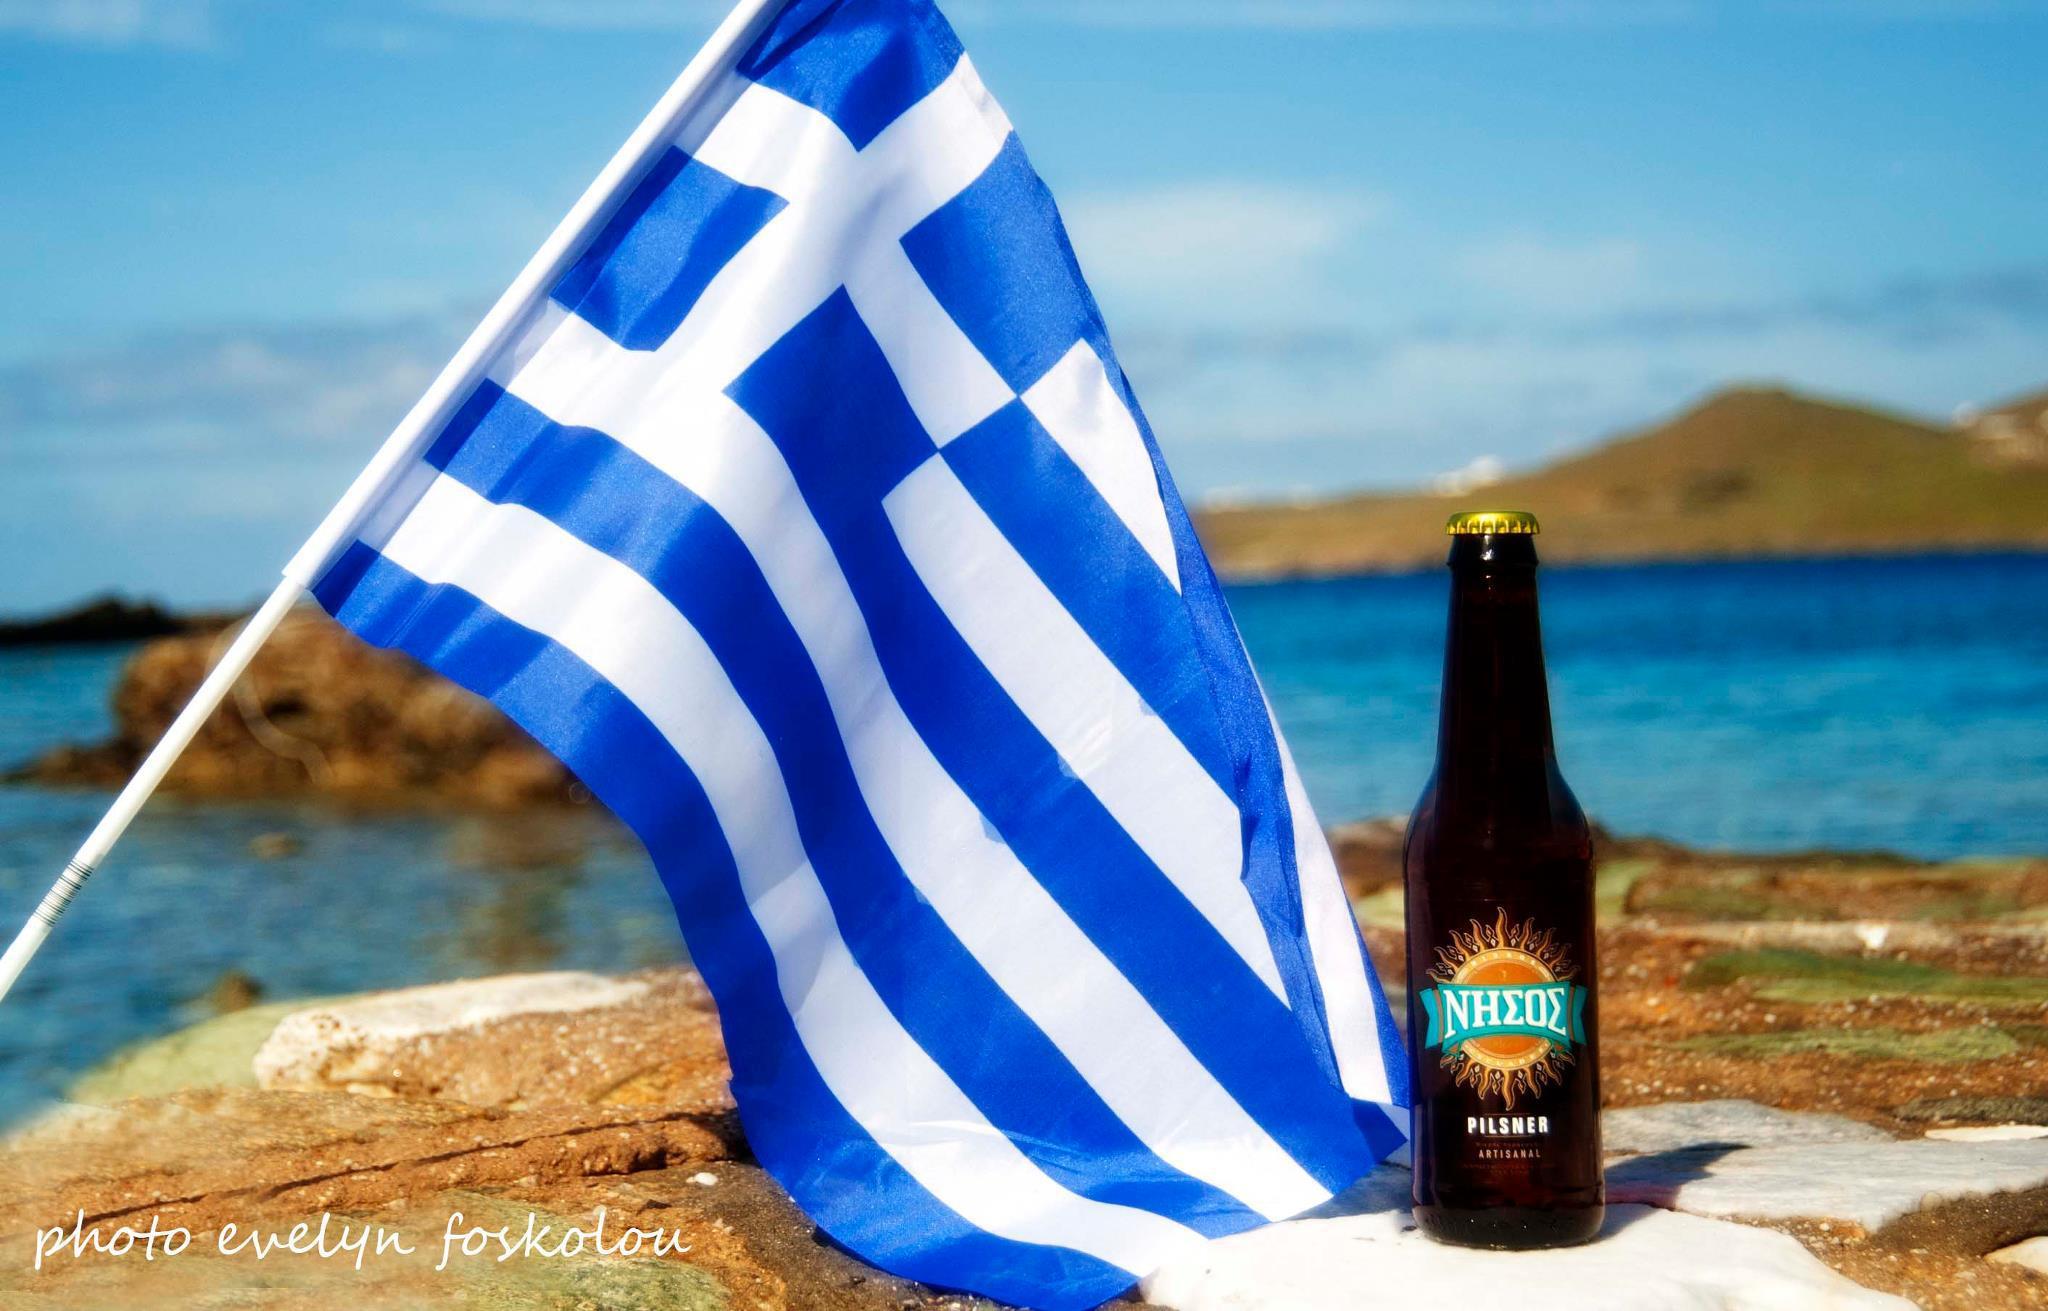 tilestwra.com | Νήσος: Η άγνωστη ελληνική μπύρα από την Τήνο που έχει βραβευθεί ως δεύτερη καλύτερη στον κόσμο!